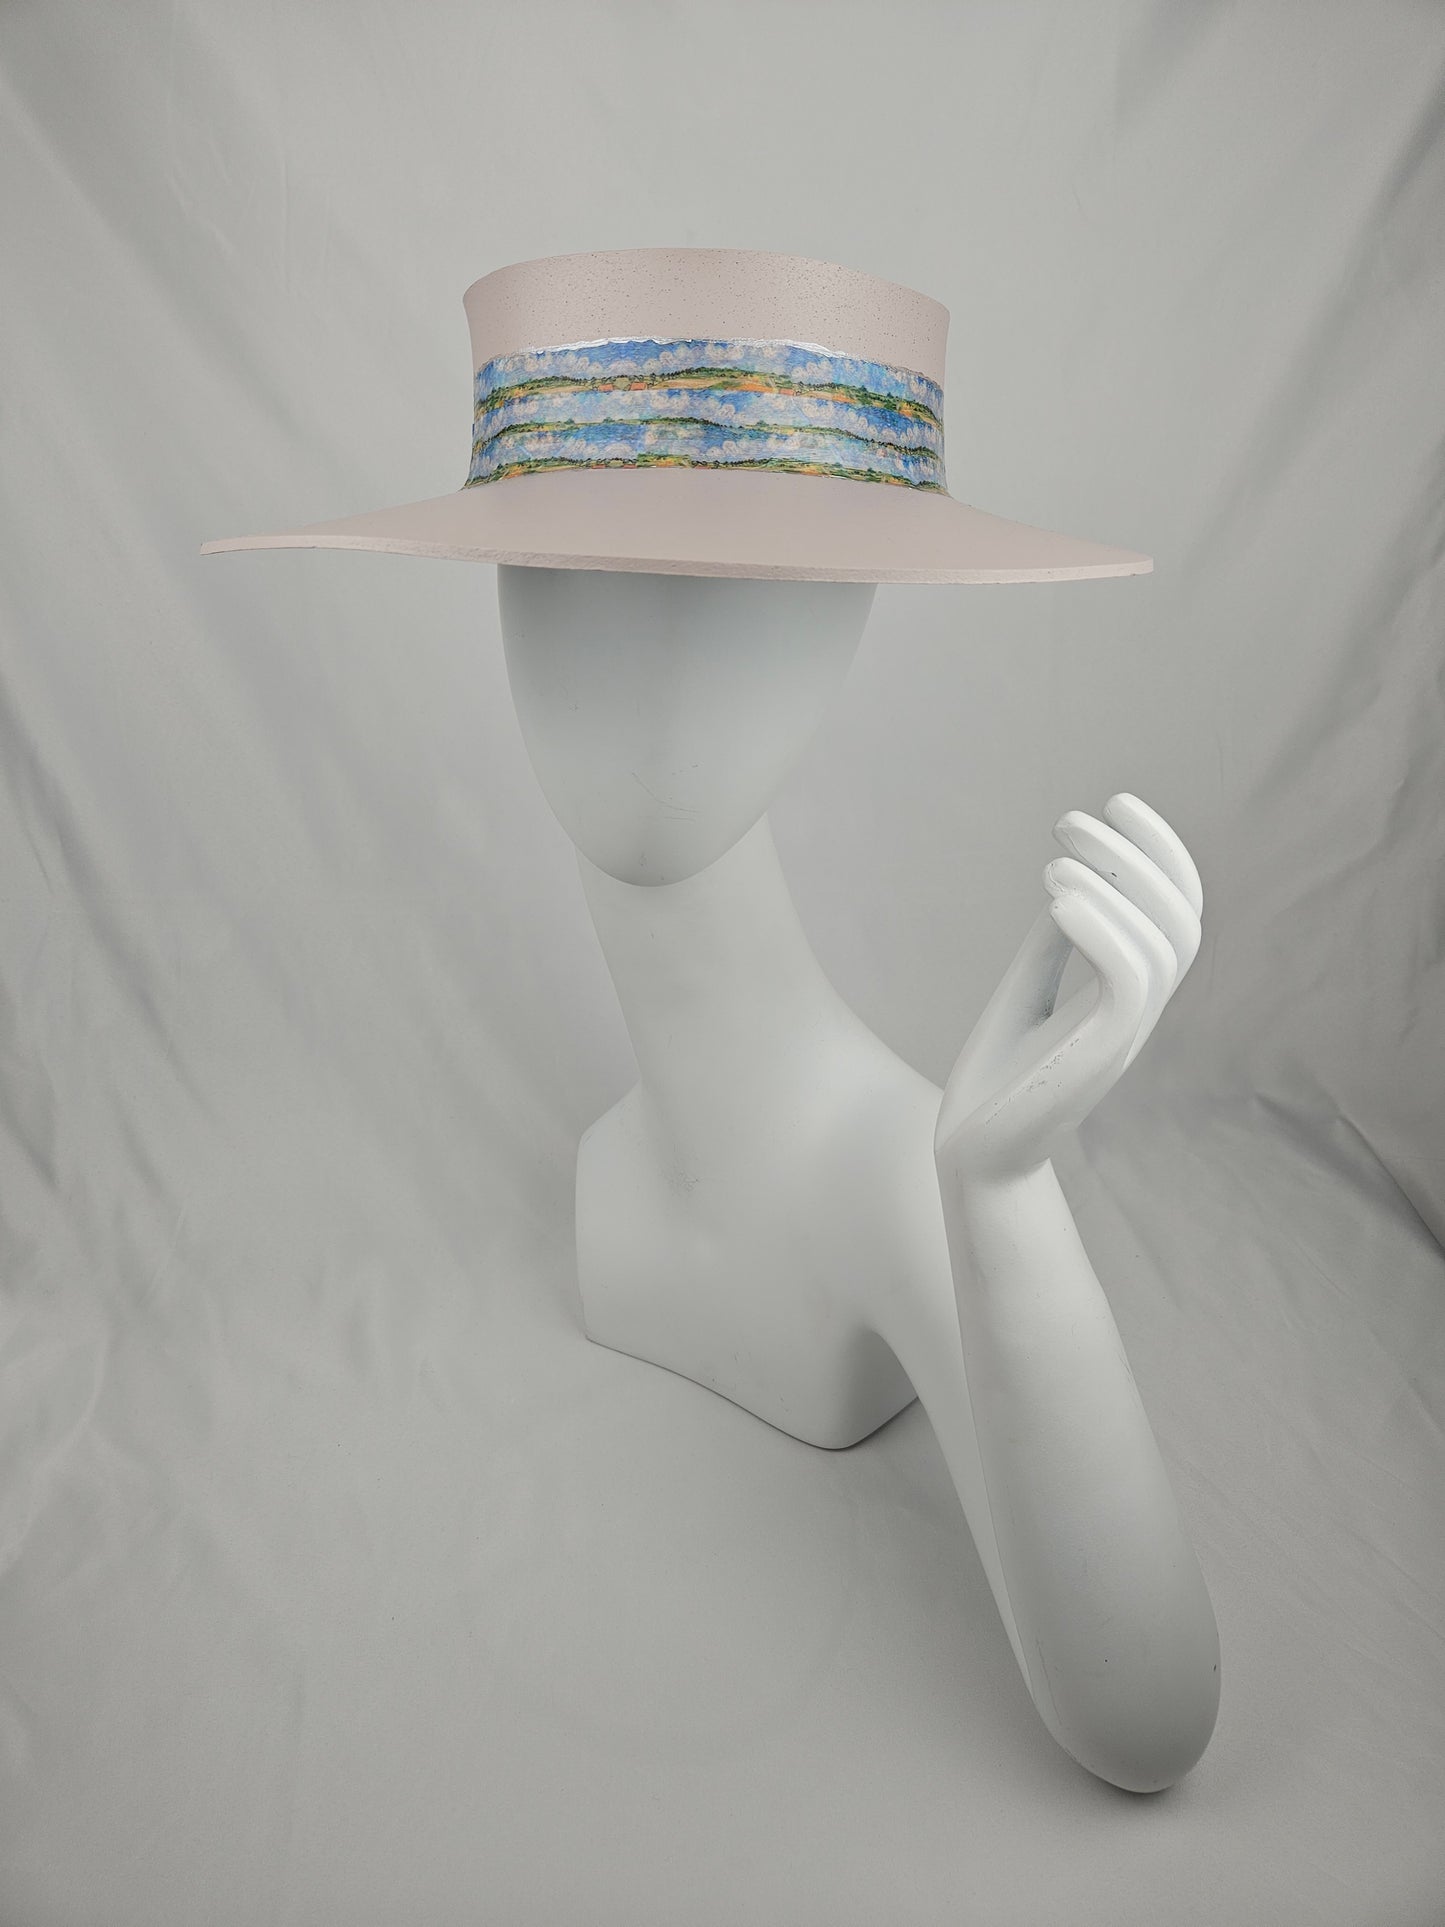 Soft Pink Audrey Sun Visor Hat with Monet Style Band: 1950s, Walks, Brunch, Asian, Golf, Easter, Church, No Headache, Derby